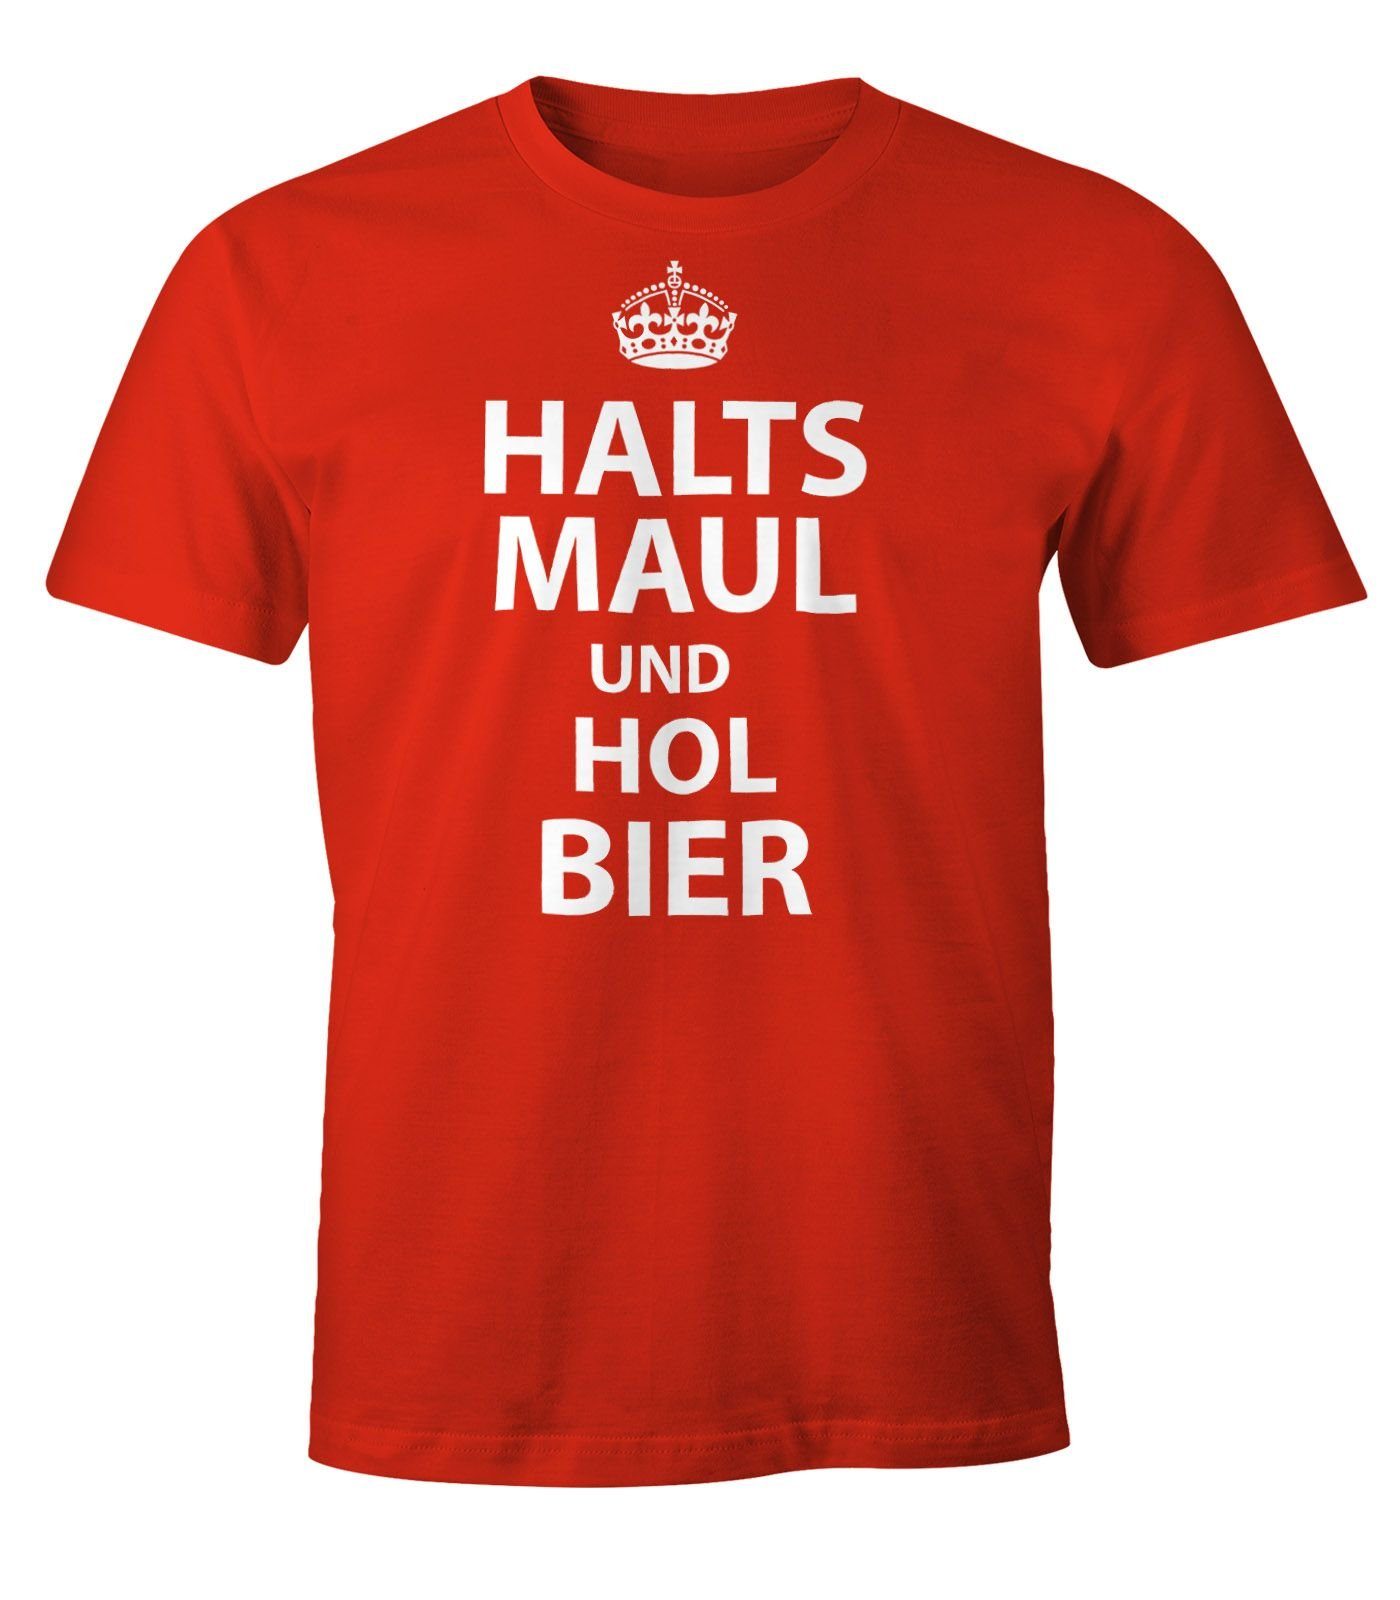 Maul hol Moonworks® mit rot Print-Shirt Fun-Shirt MoonWorks Halts T-Shirt Print und Bier Herren